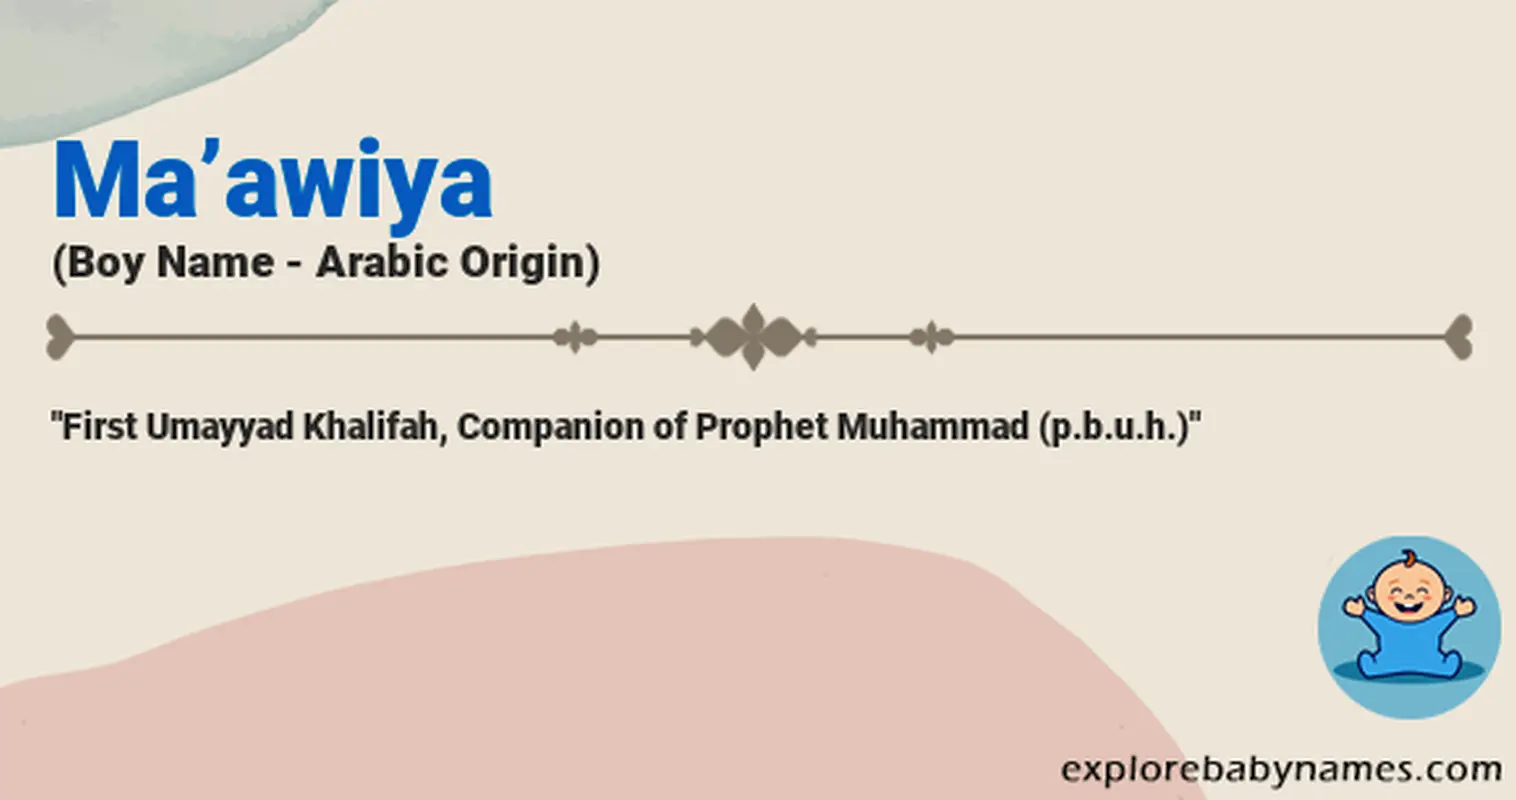 Meaning of Maawiya